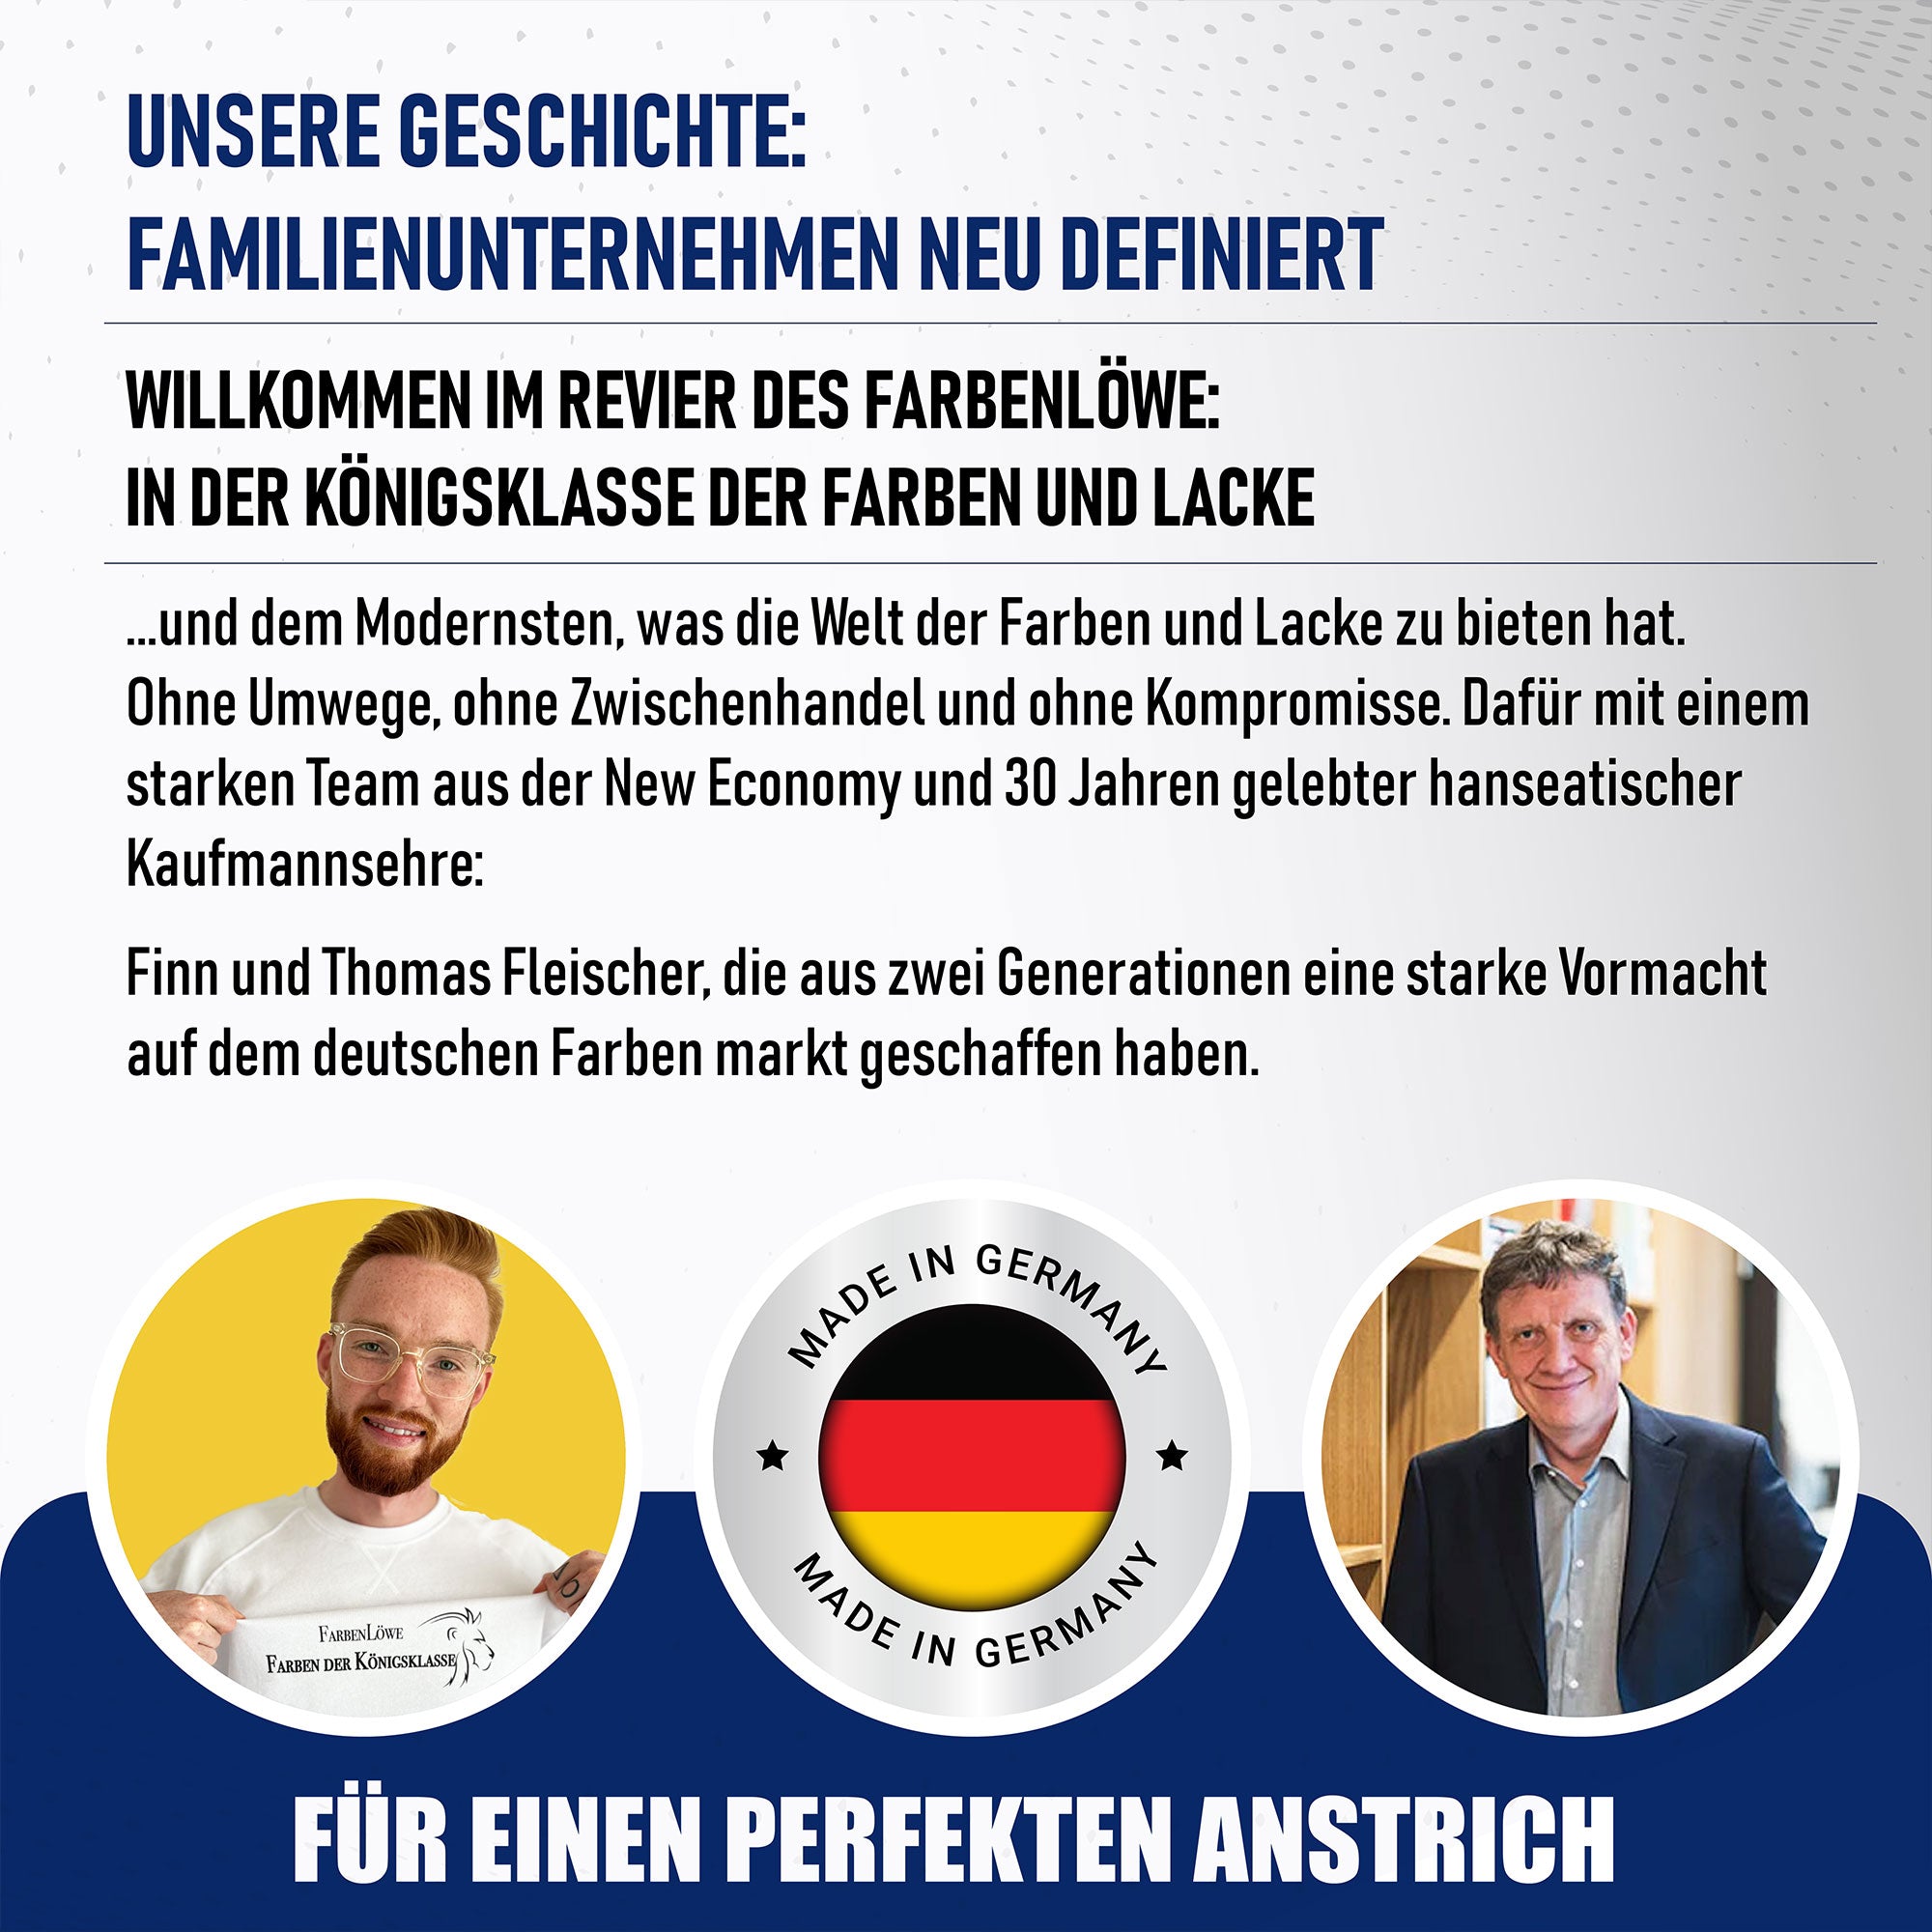 Hamburger Lack-Profi Buntlack in Schwarzoliv RAL 6015 mit Lackierset (X300) & Verdünnung (1 L) - 30% Sparangebot